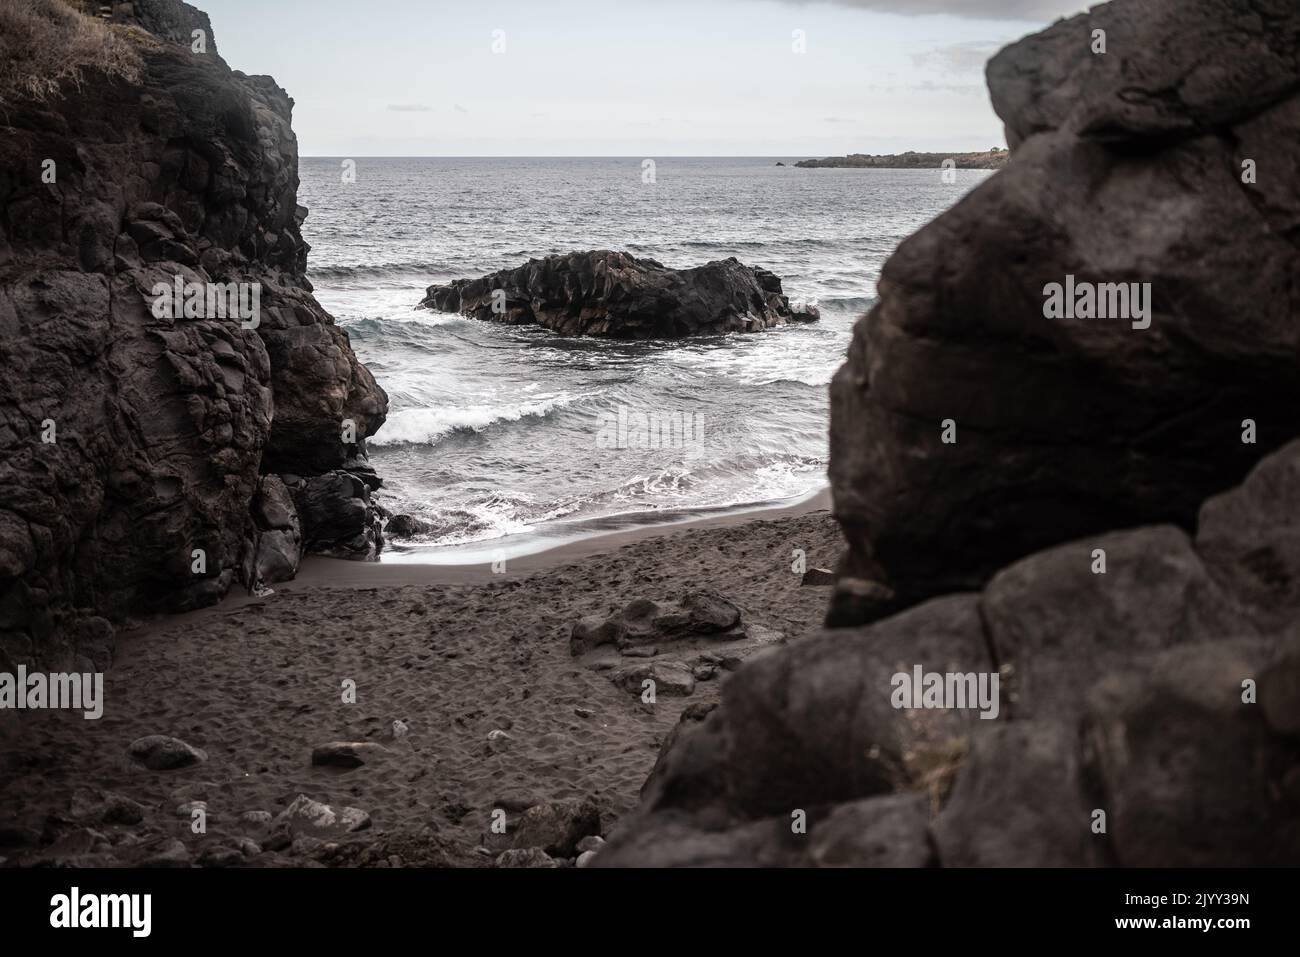 Black sand beach hidden between blurred volcanic rocks. Dramatic landscape Stock Photo